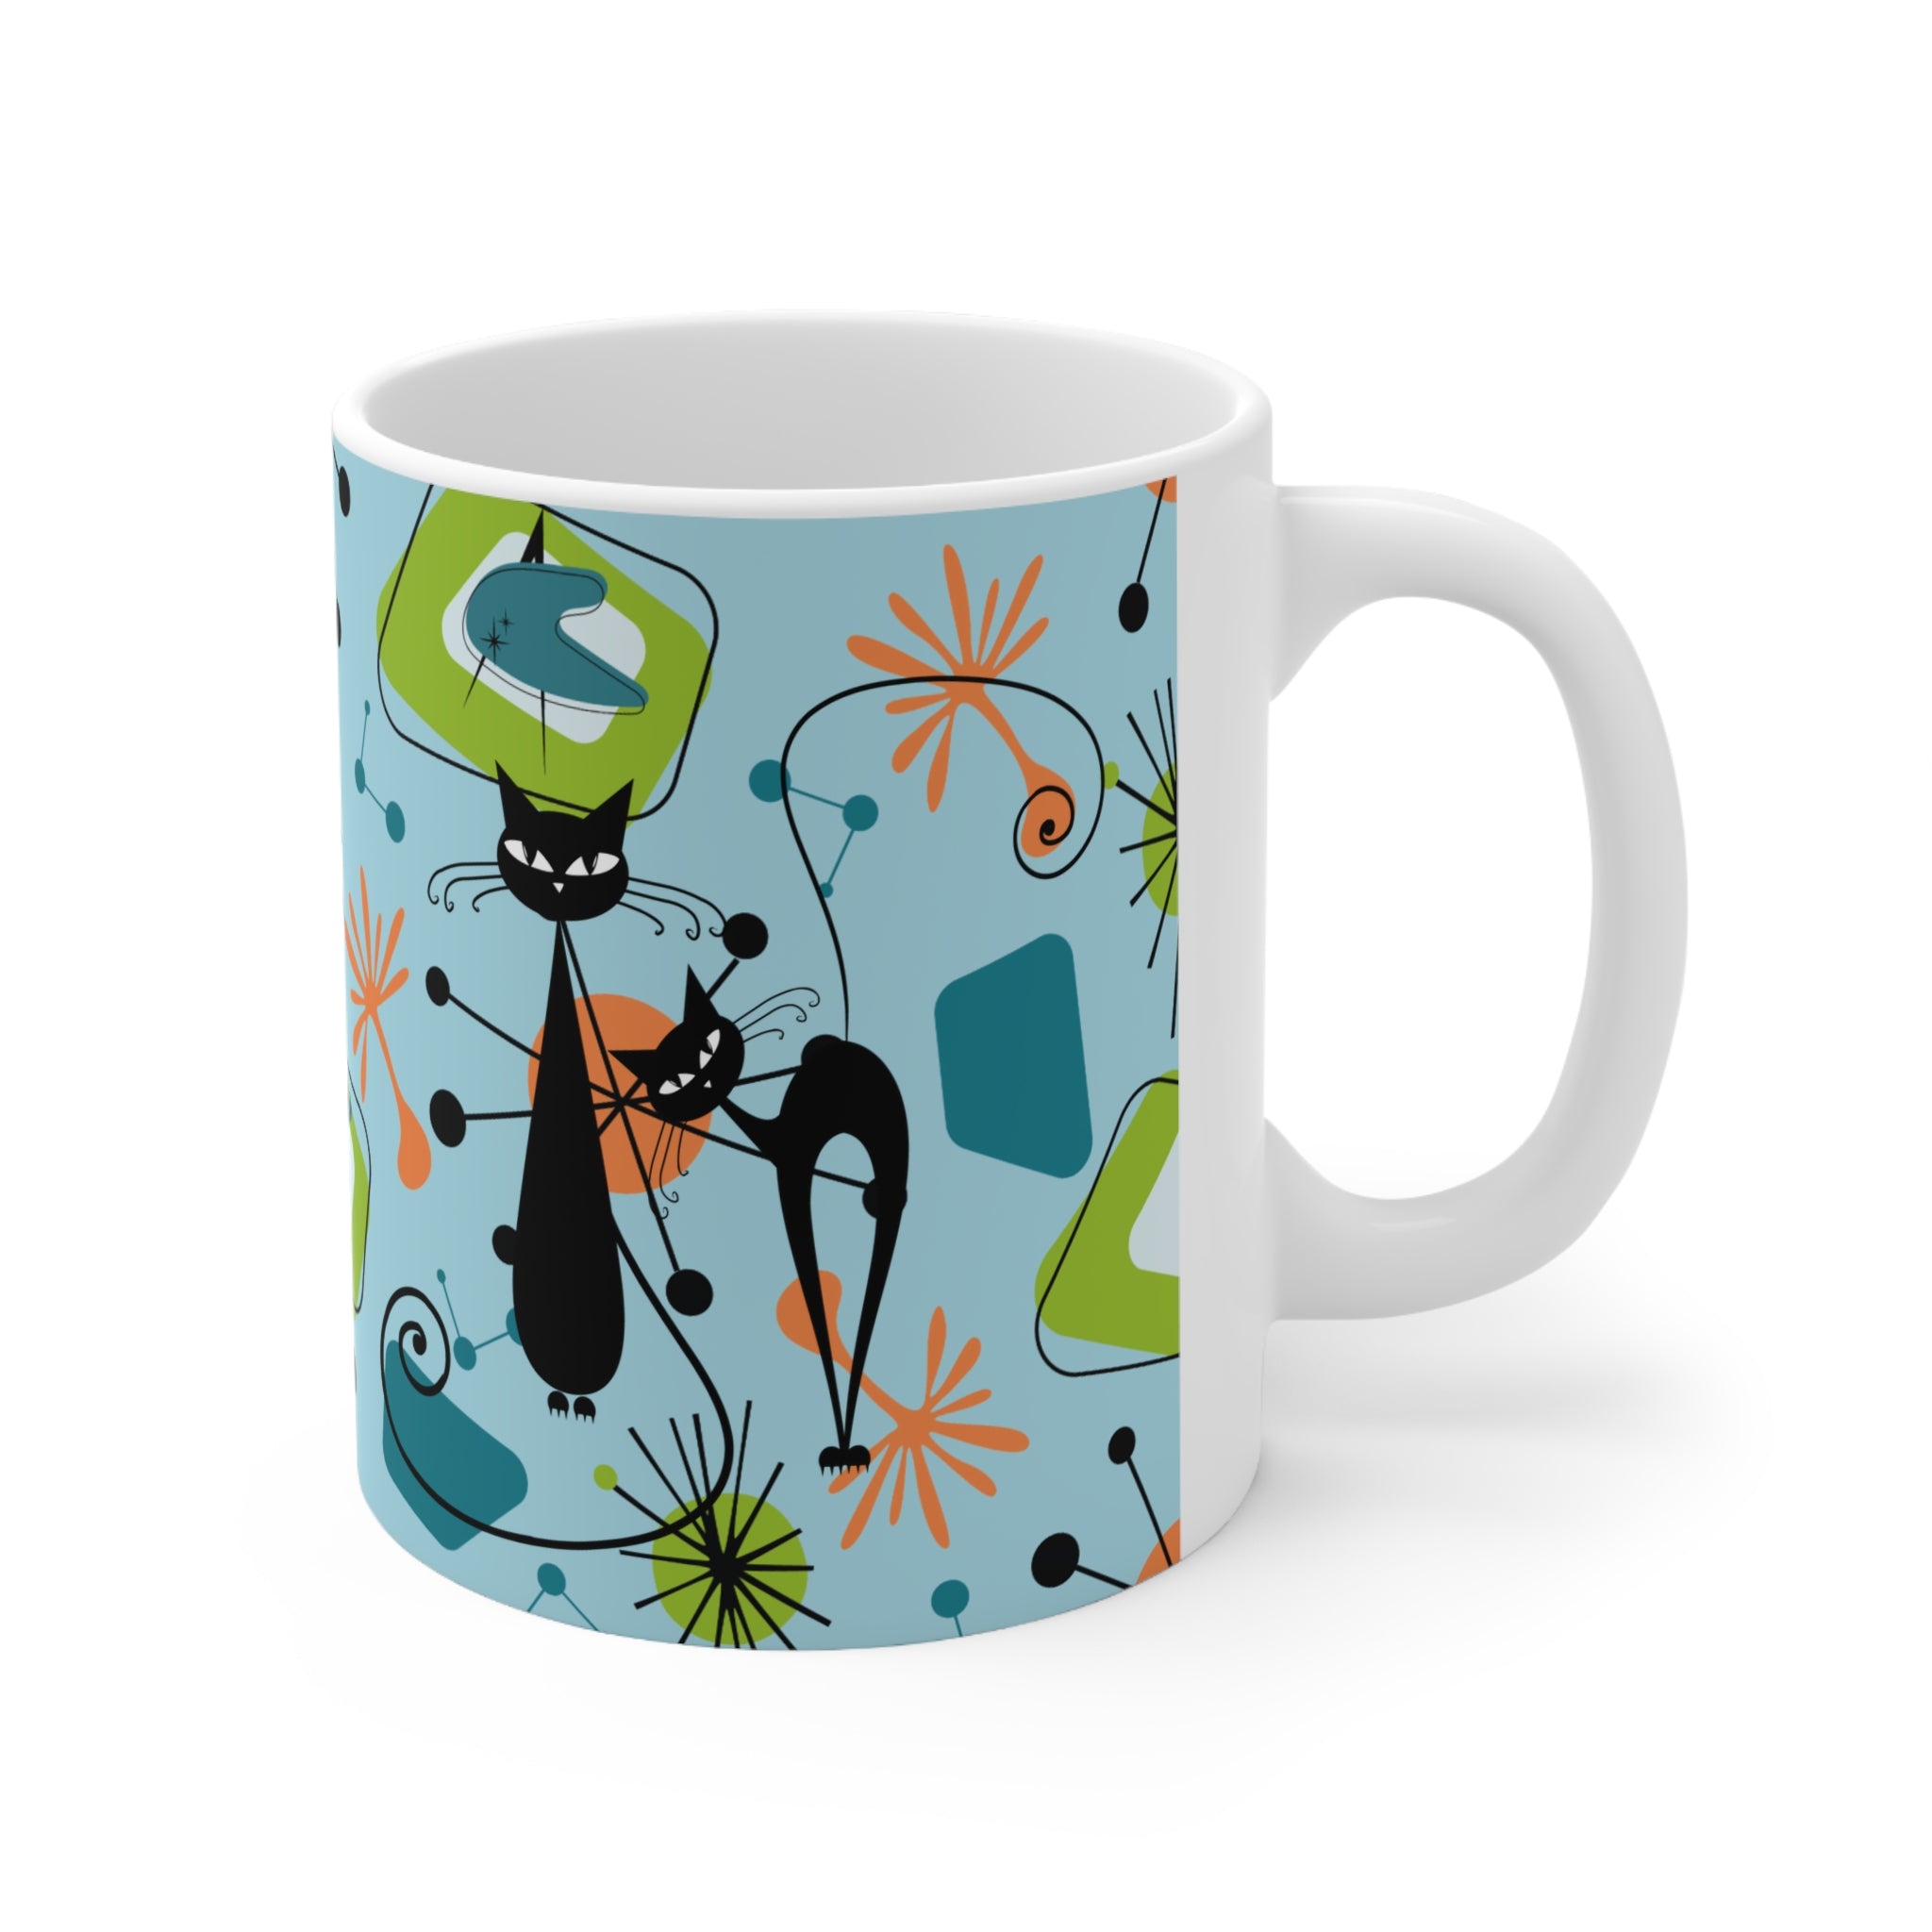 Atomic Cat Coffee Mug, Kitschy 50s Mid Century Modern Coffee, Tea, Blue, Green, Sputnik Starbursts Designs Ceramic Mug 11oz